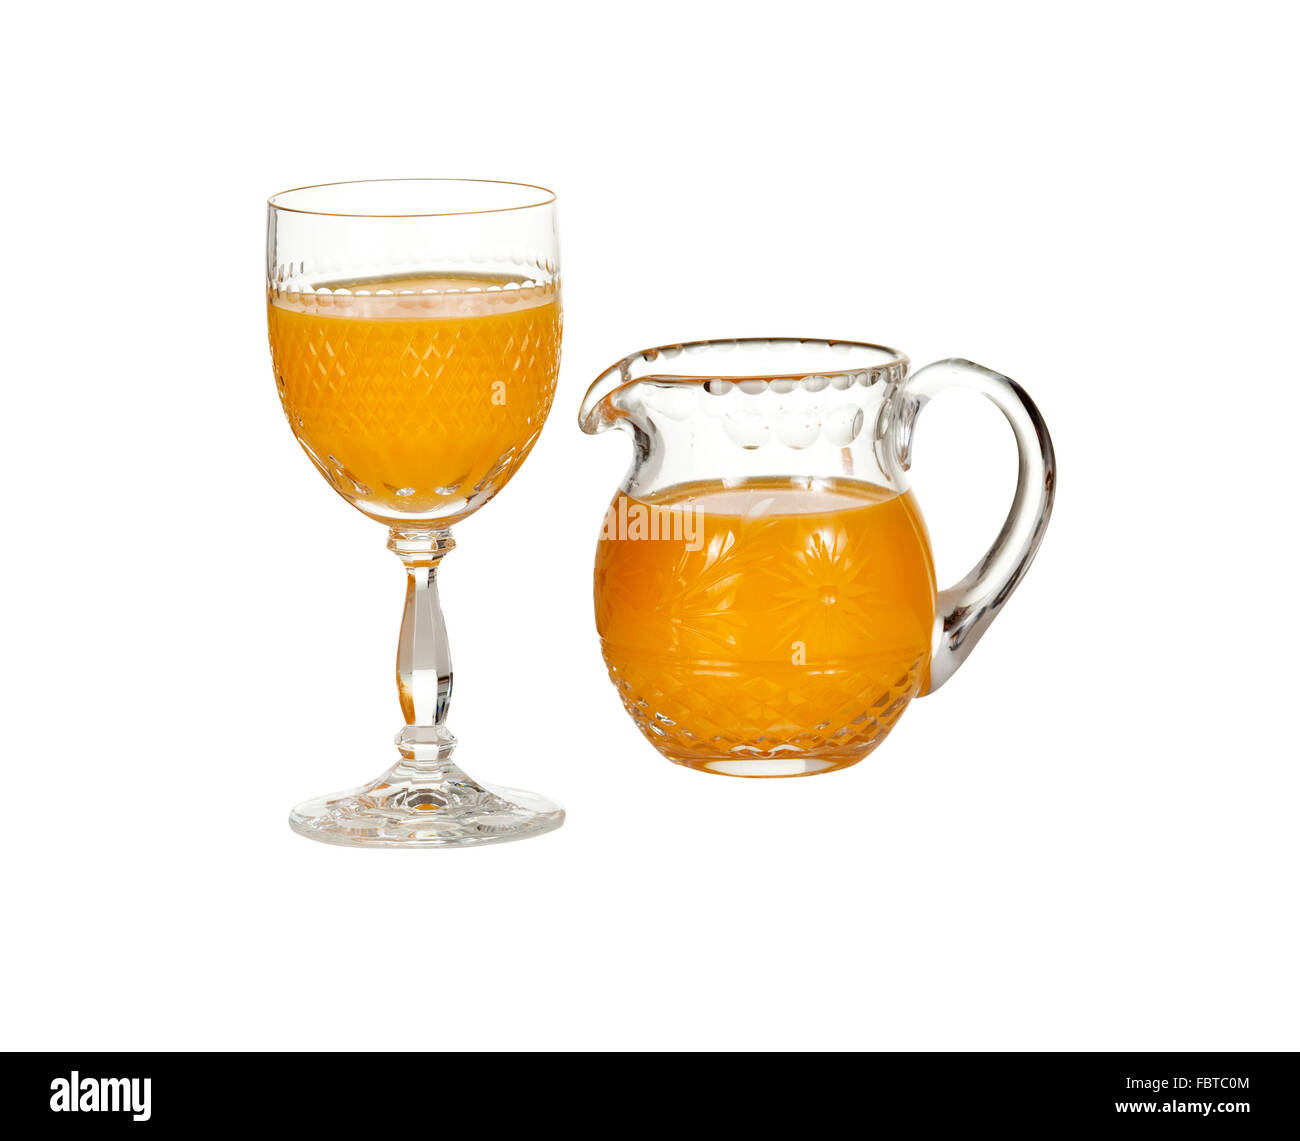 https://c8.alamy.com/comp/FBTC0M/cut-glass-isolated-goblet-and-jug-filled-with-fresh-orange-juice-FBTC0M.jpg